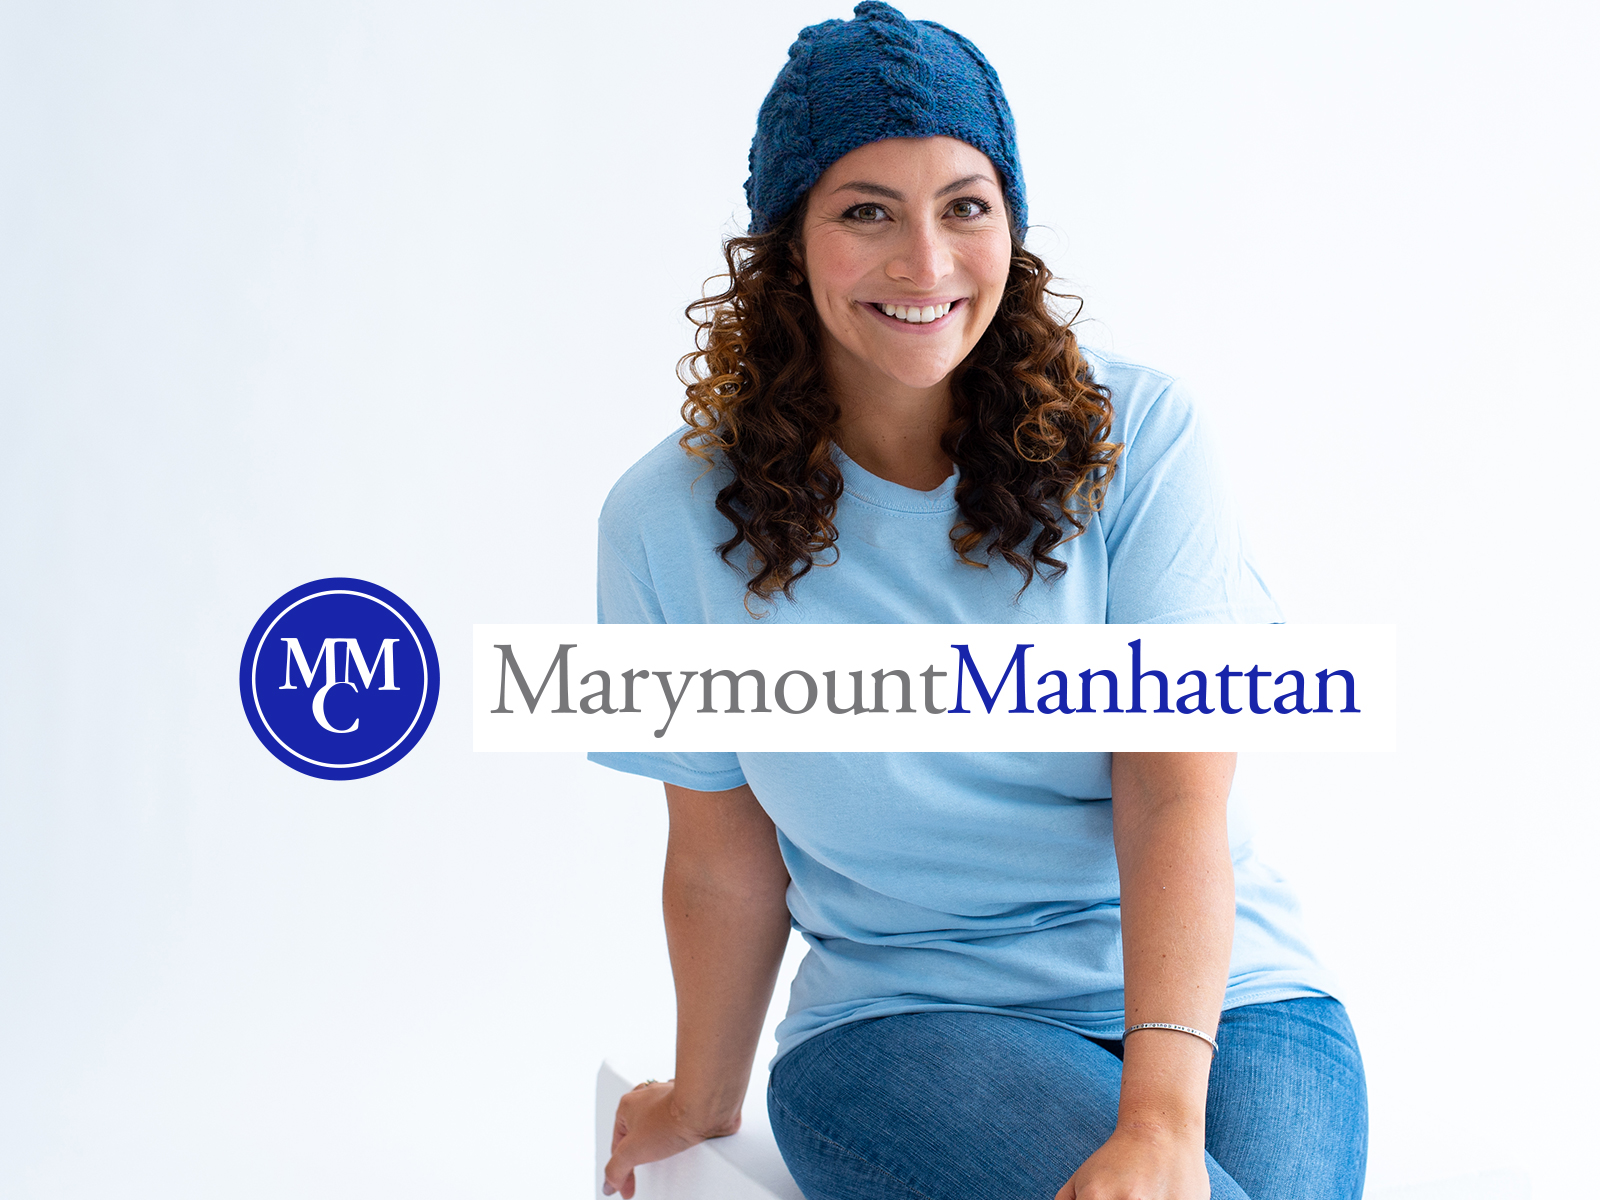 Marymount Manhattan logo overlaid on image of Shira in blue hat